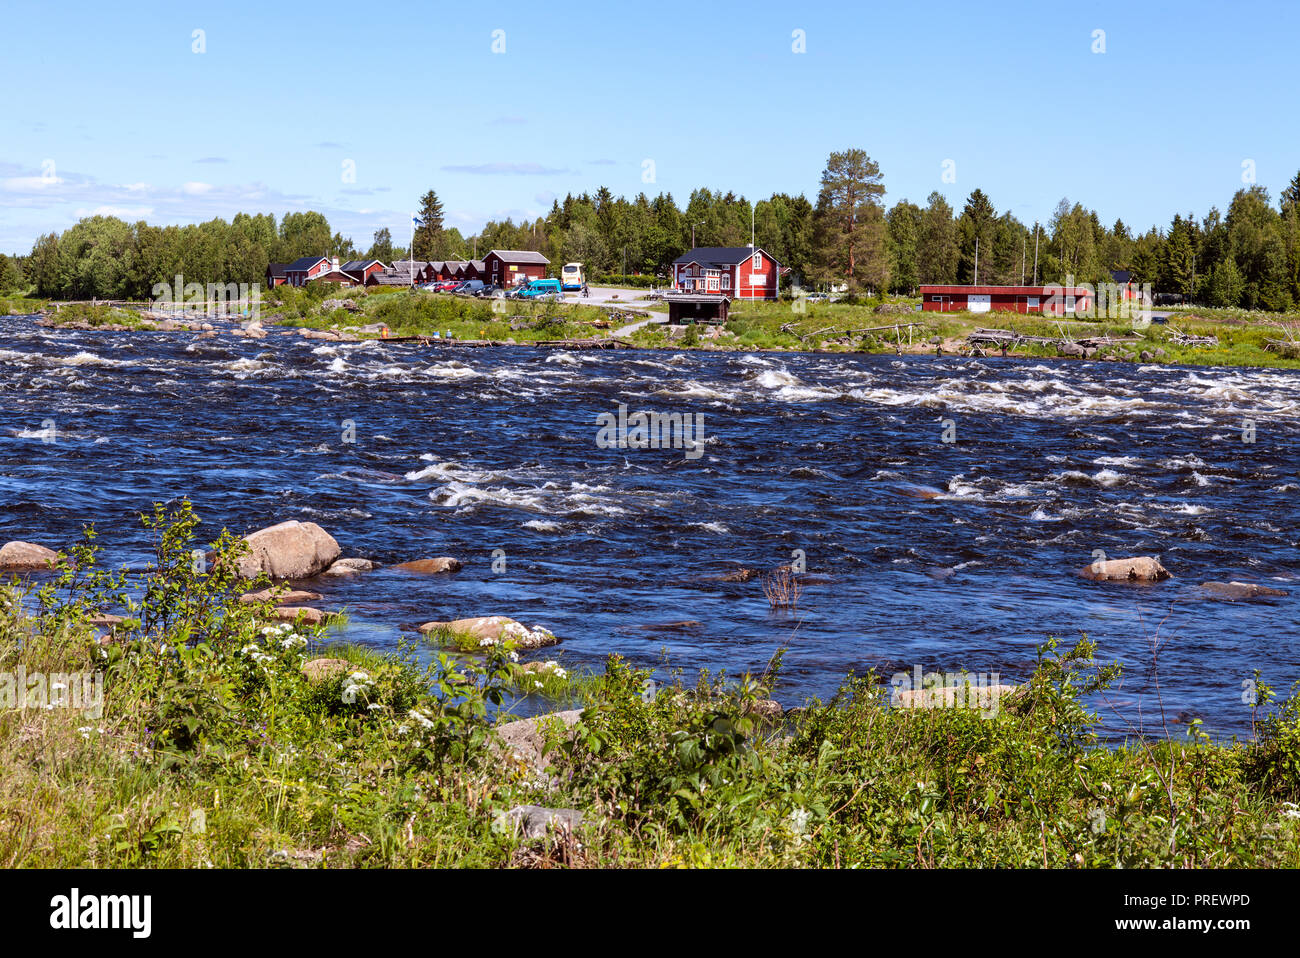 KUKKOLAFORSEN, SWEDEN ON JUNE 27, 2018. View of the river and the Finnish village Kukkola. Buildings and vehicle. Editorial use. Stock Photo